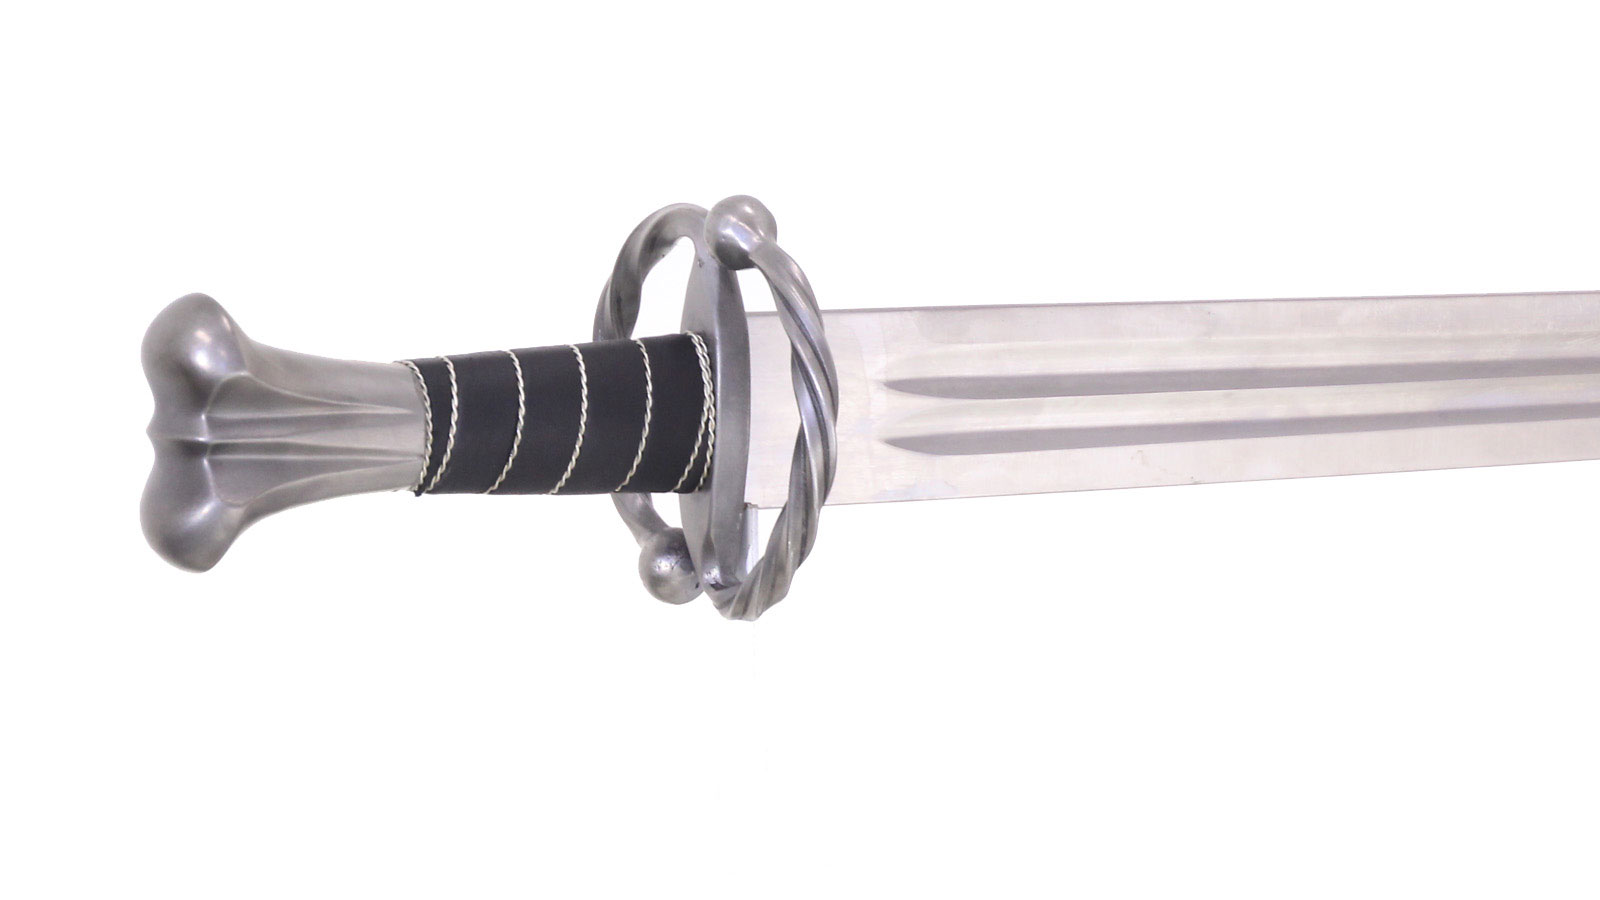 Katzbalger Sword